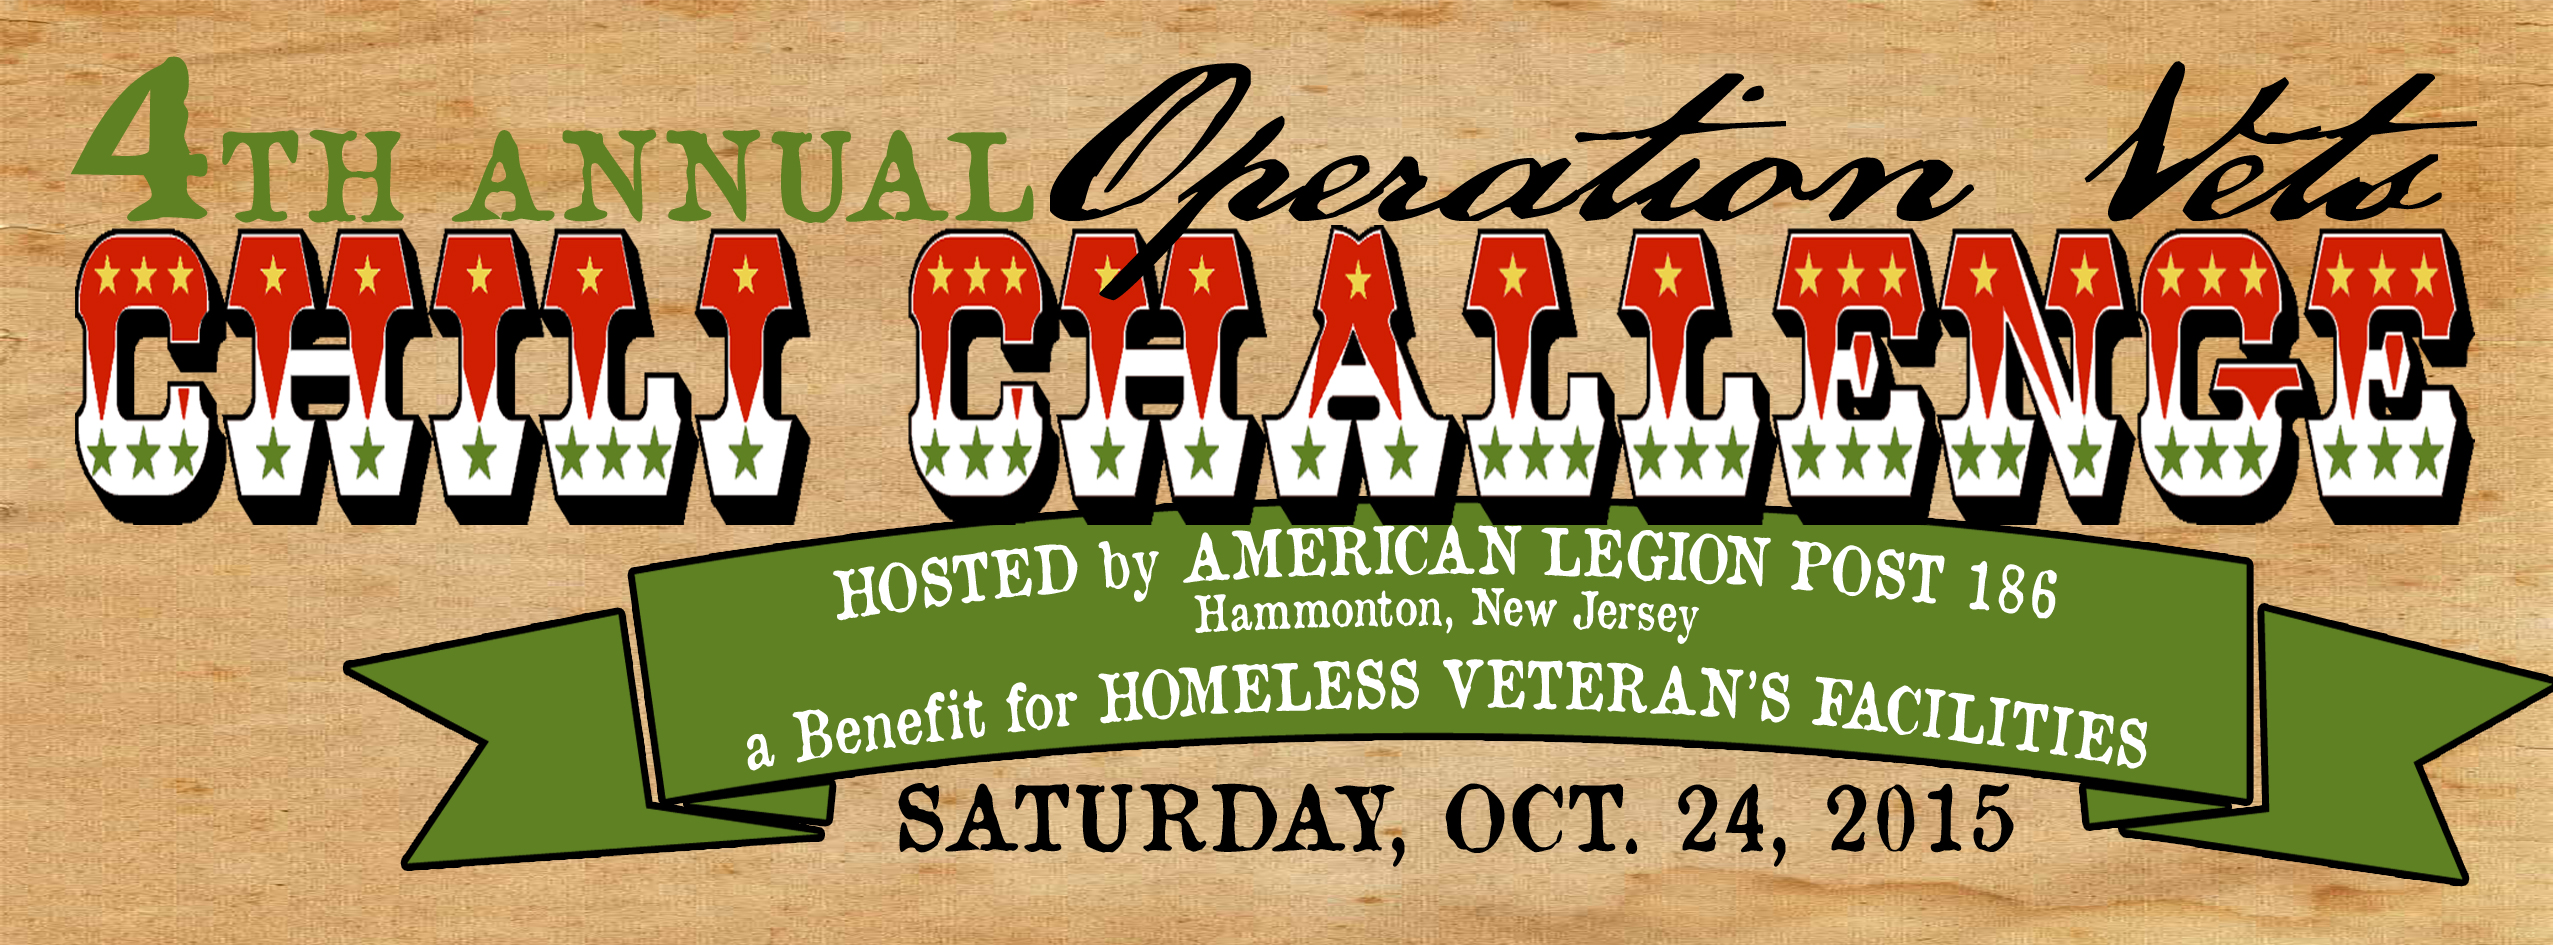 4th Annual Operation Veterans Chili Challenge